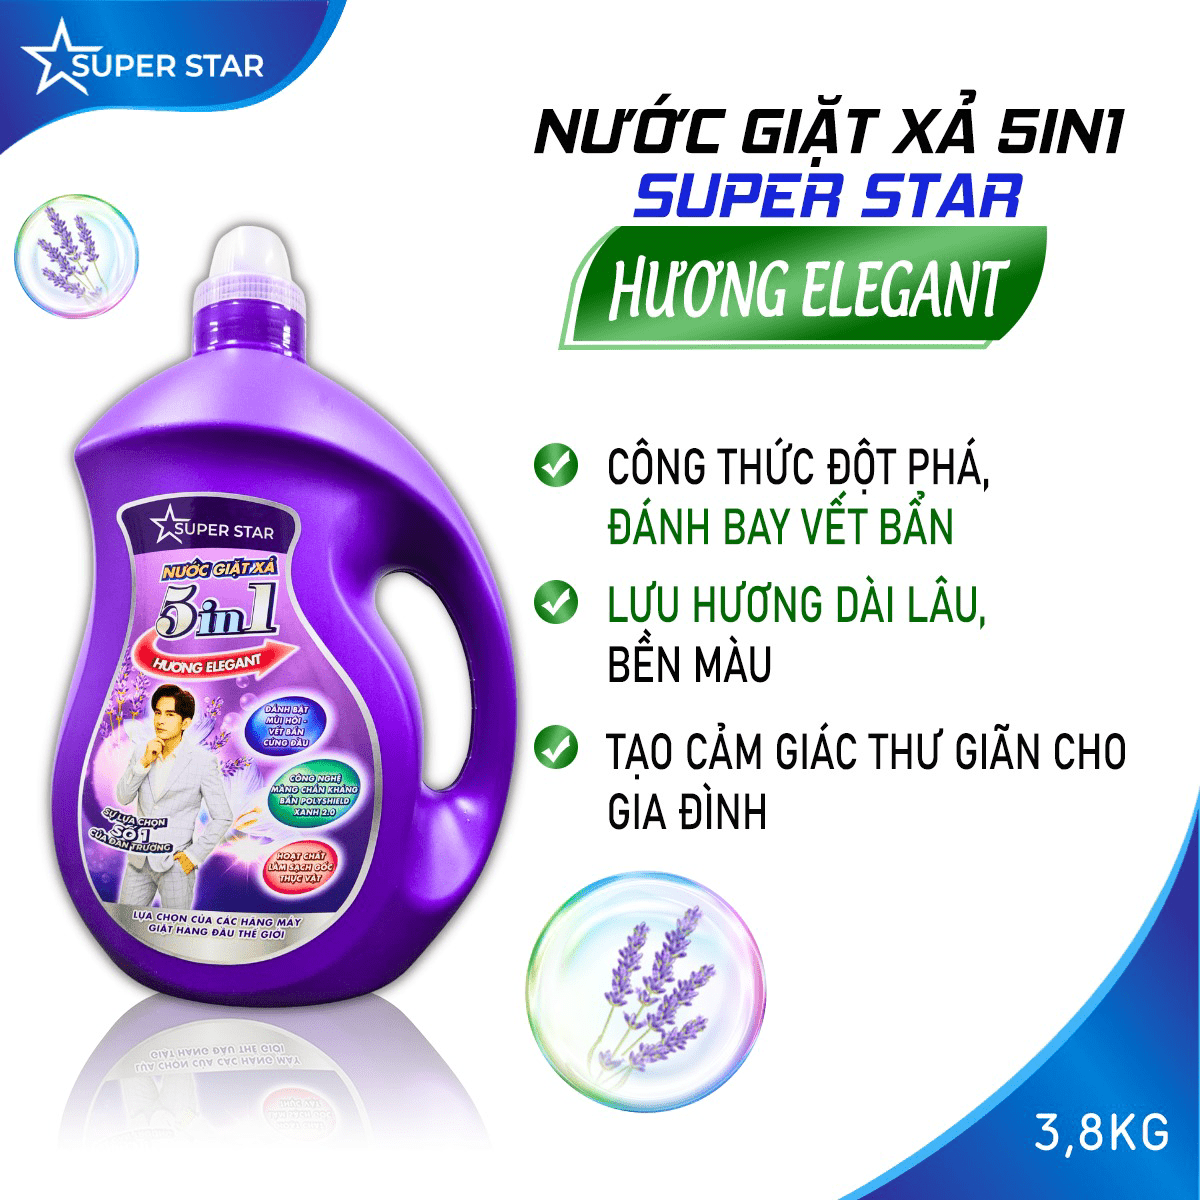 mochanstore.com NUOC GIAT XA CAO CAP 5 IN 1 3.8KG SUPER STAR 1